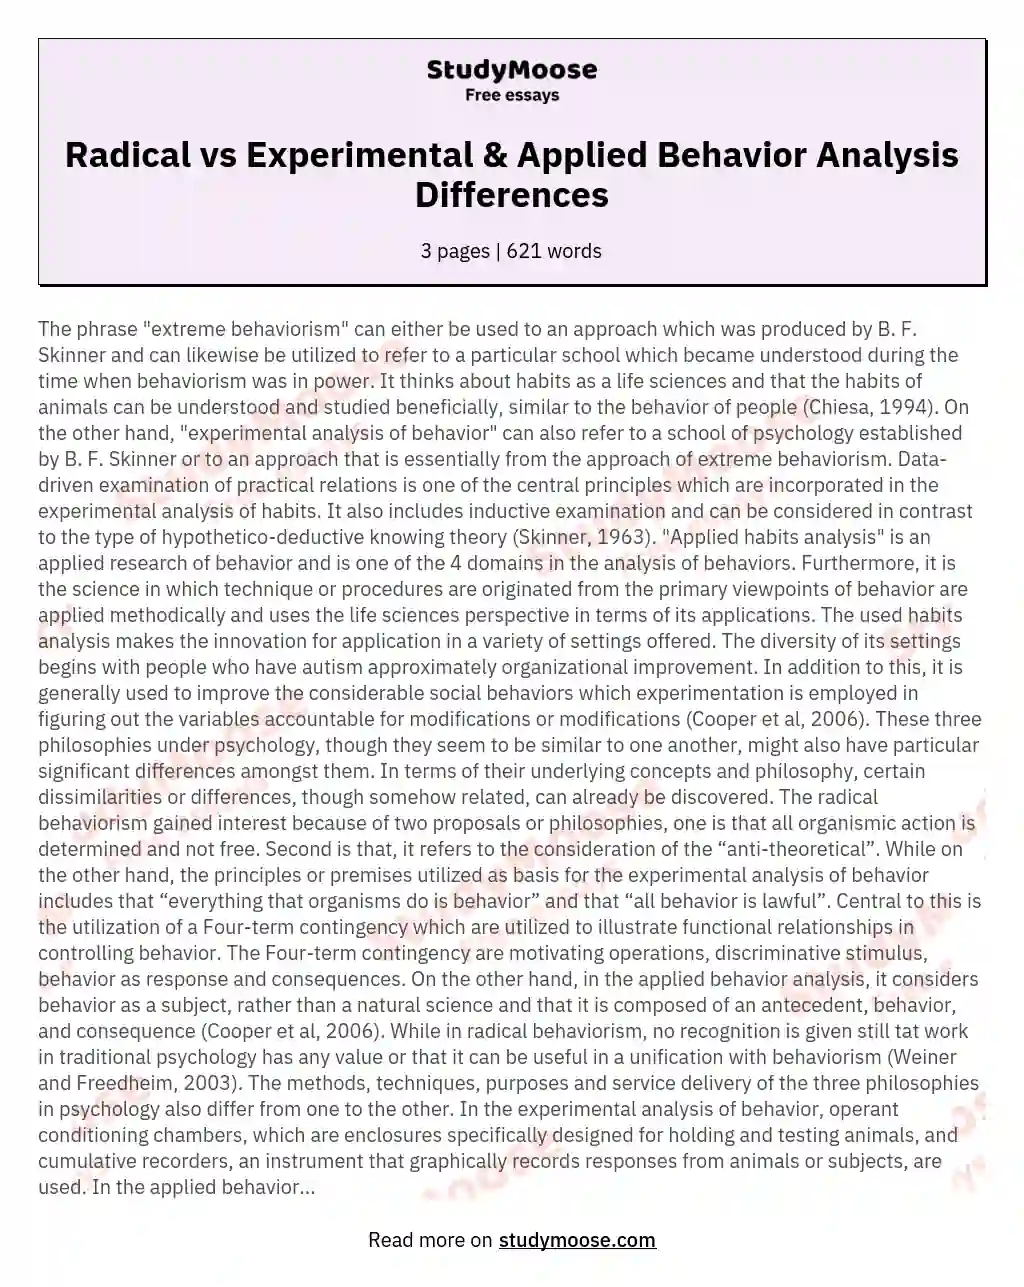 Radical vs Experimental & Applied Behavior Analysis Differences essay